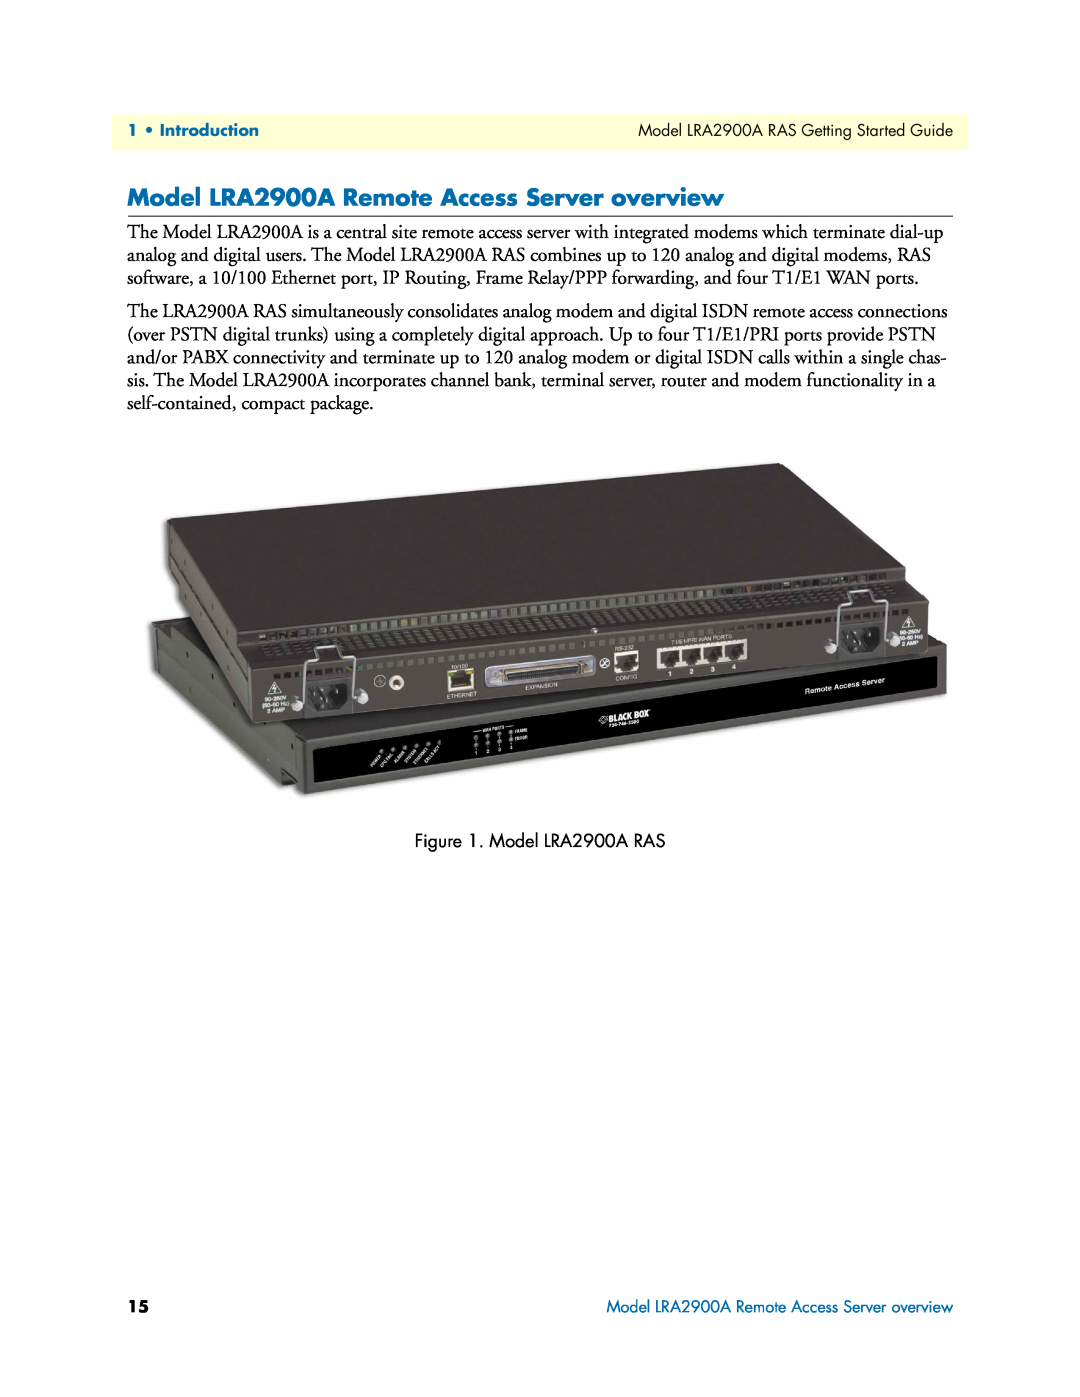 Black Box manual Model LRA2900A Remote Access Server overview, Model LRA2900A RAS 